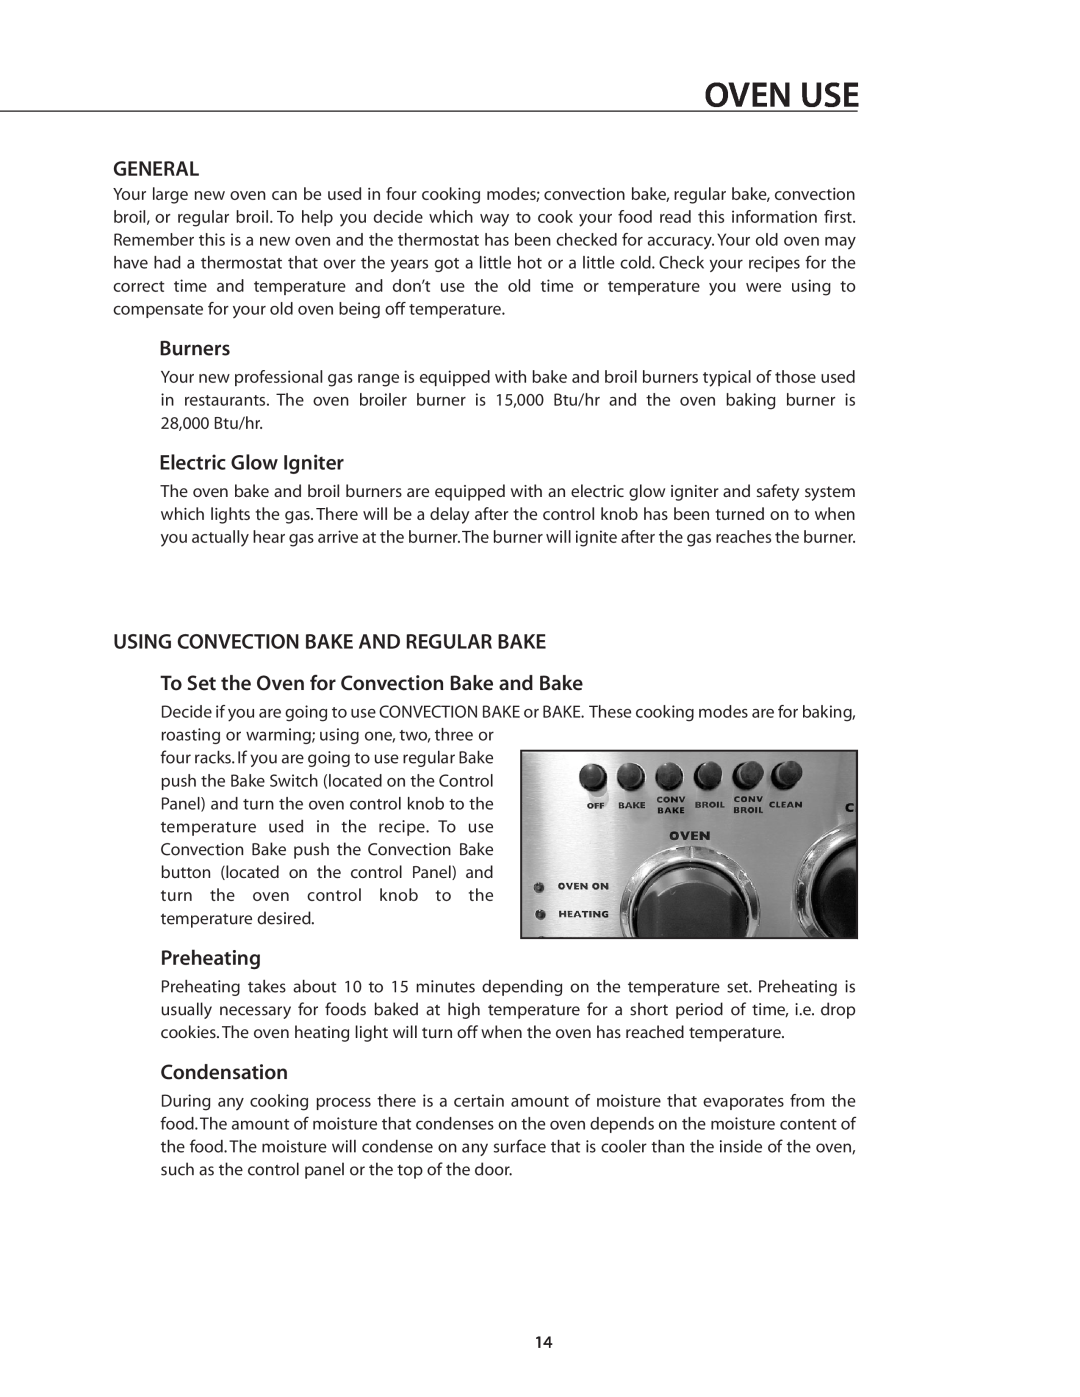 DCS RGSC-305BK manual Oven Use, General, Burners, Electric Glow Igniter, Using Convection Bake And Regular Bake, Preheating 